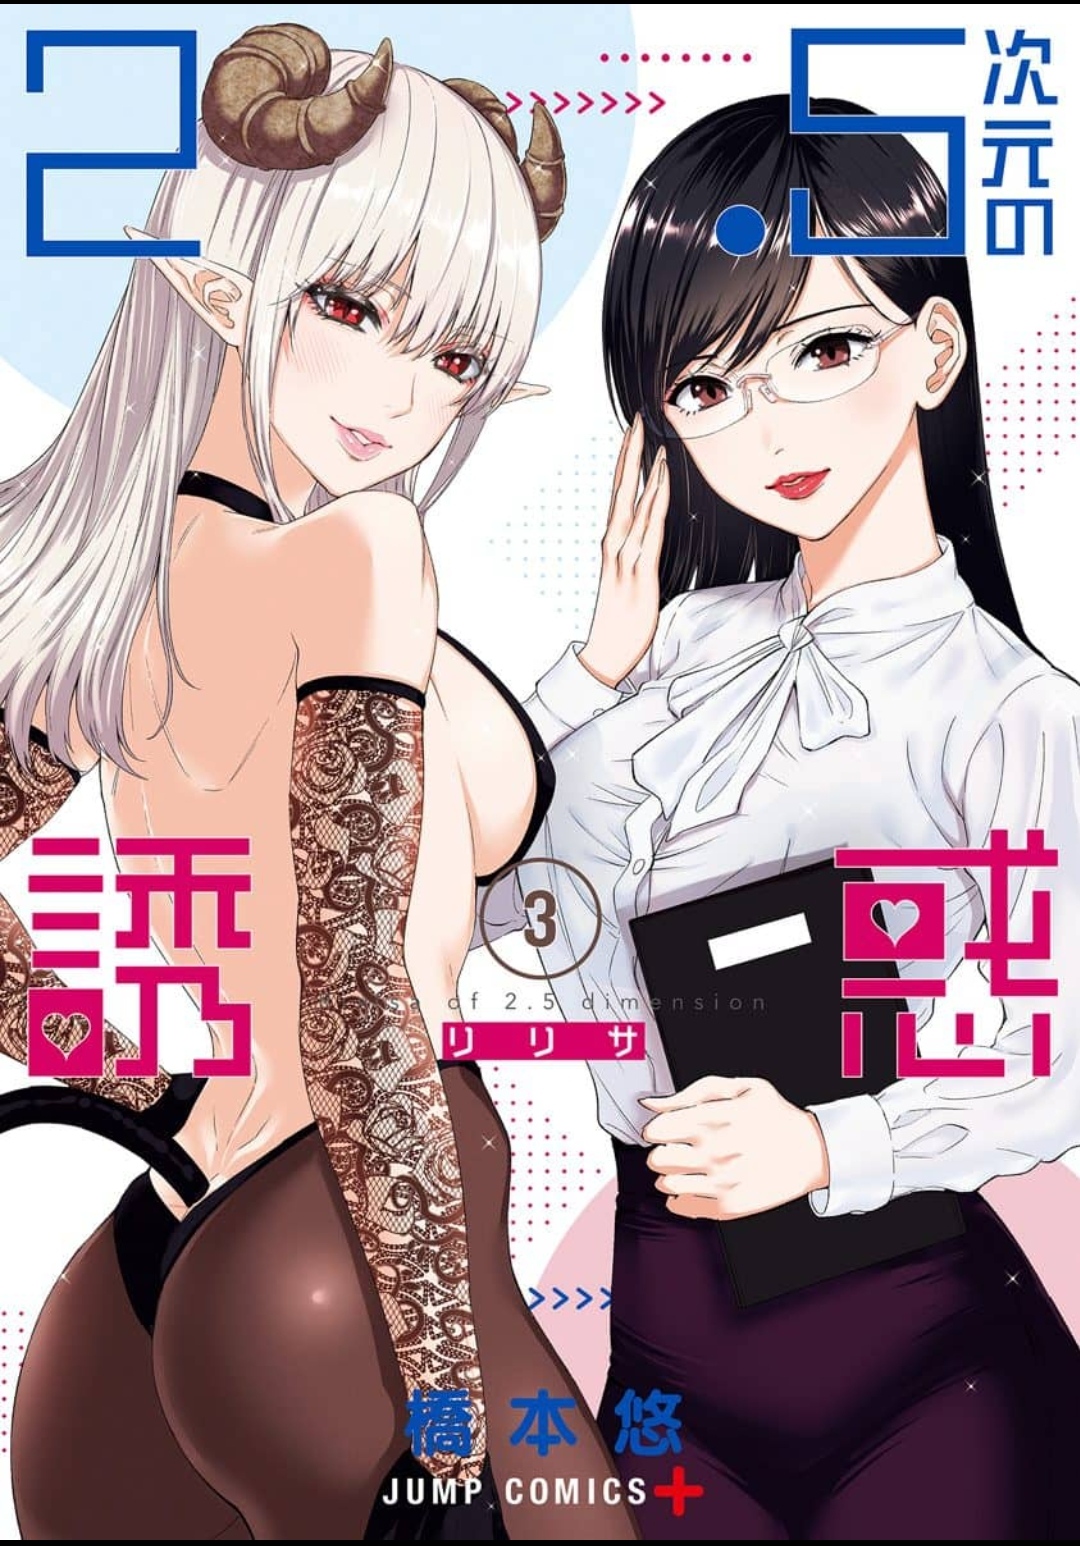 Manga Volume 3 2 5 Dimensional Seduction Wiki Fandom